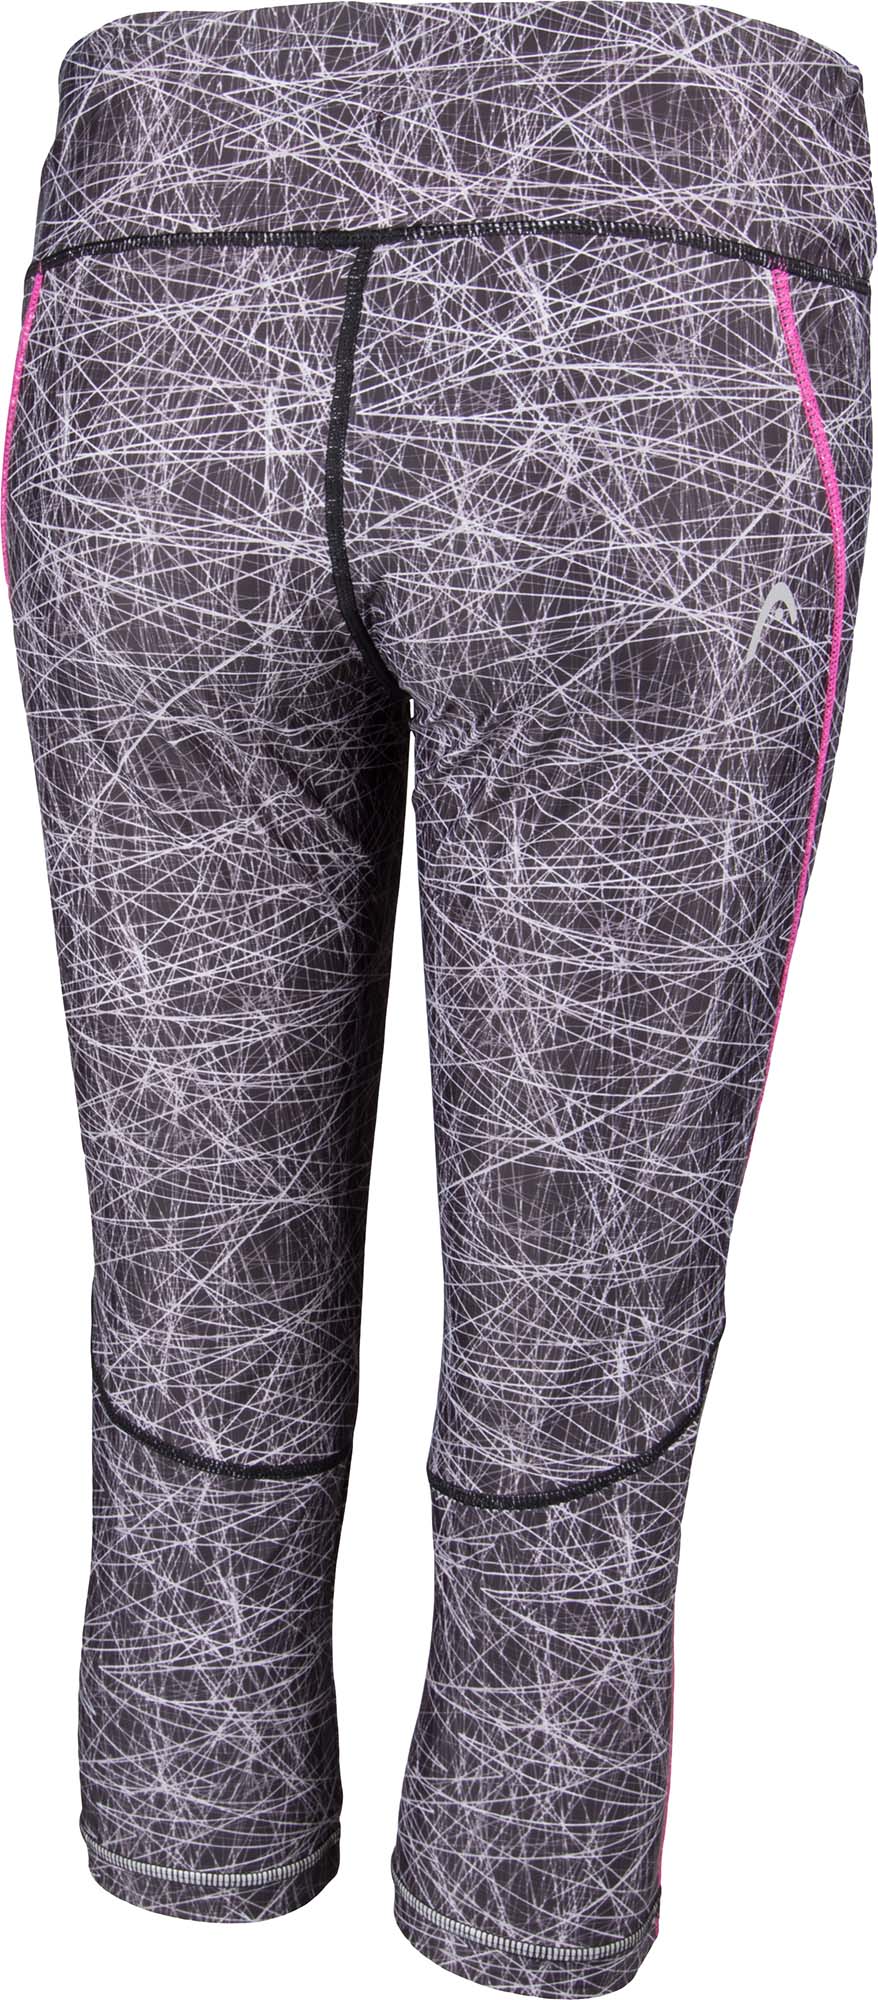 Women’s 3/4 length functional pants